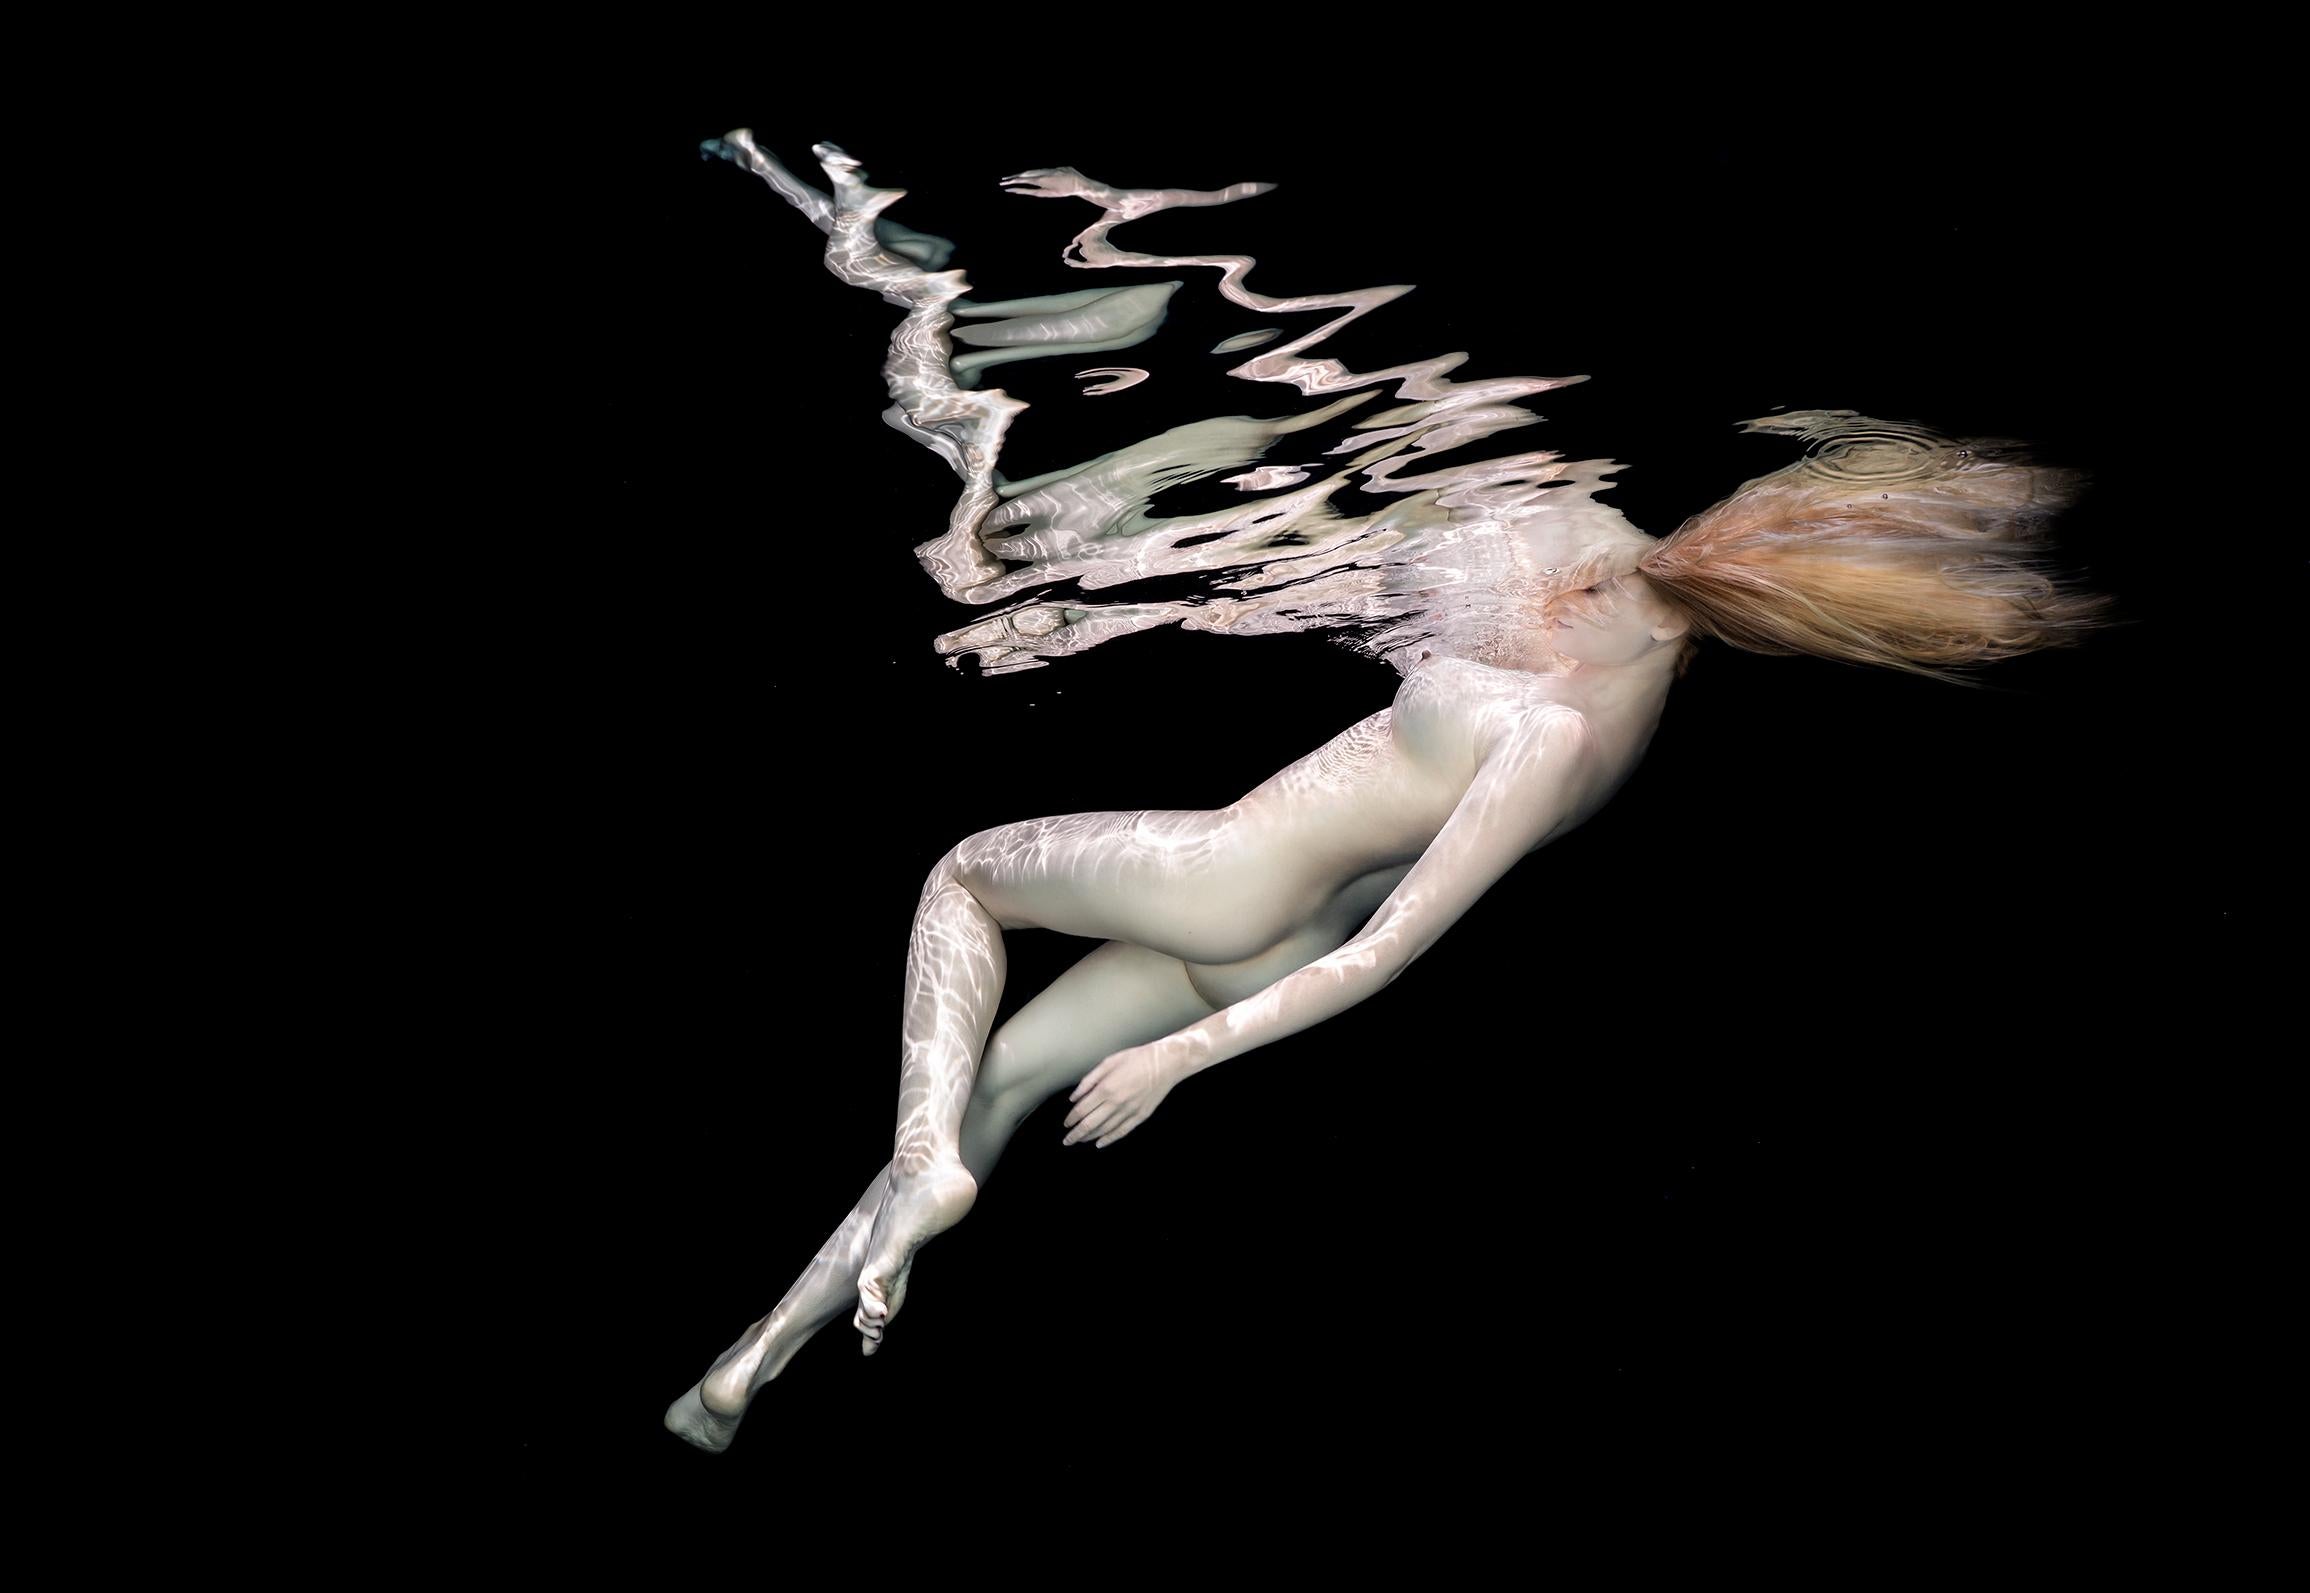 Porcelain III  - underwater nude photograph - print on paper 18х24"